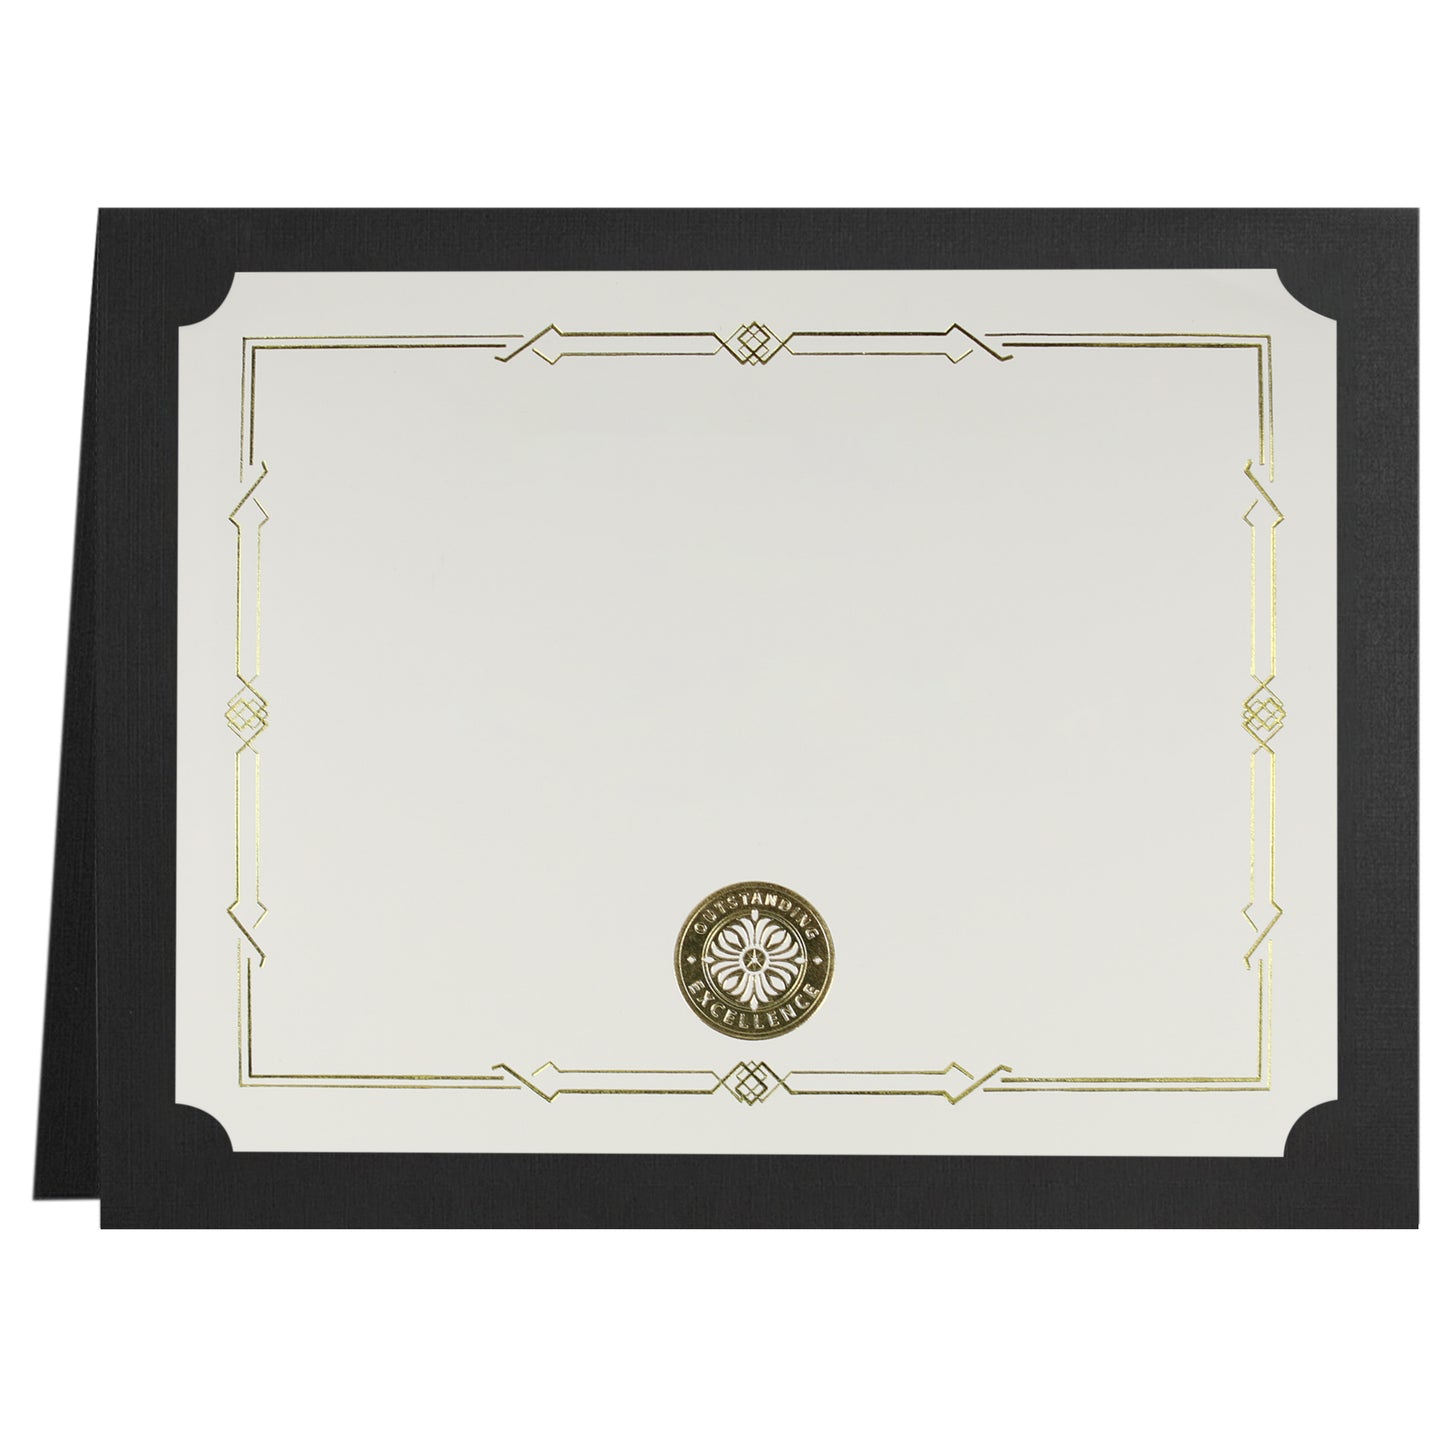 St. James® Certificate Holders/Document Covers/Diploma Holders, Black, Gold Foil Border, Linen Finish, Pack of 5, 83802